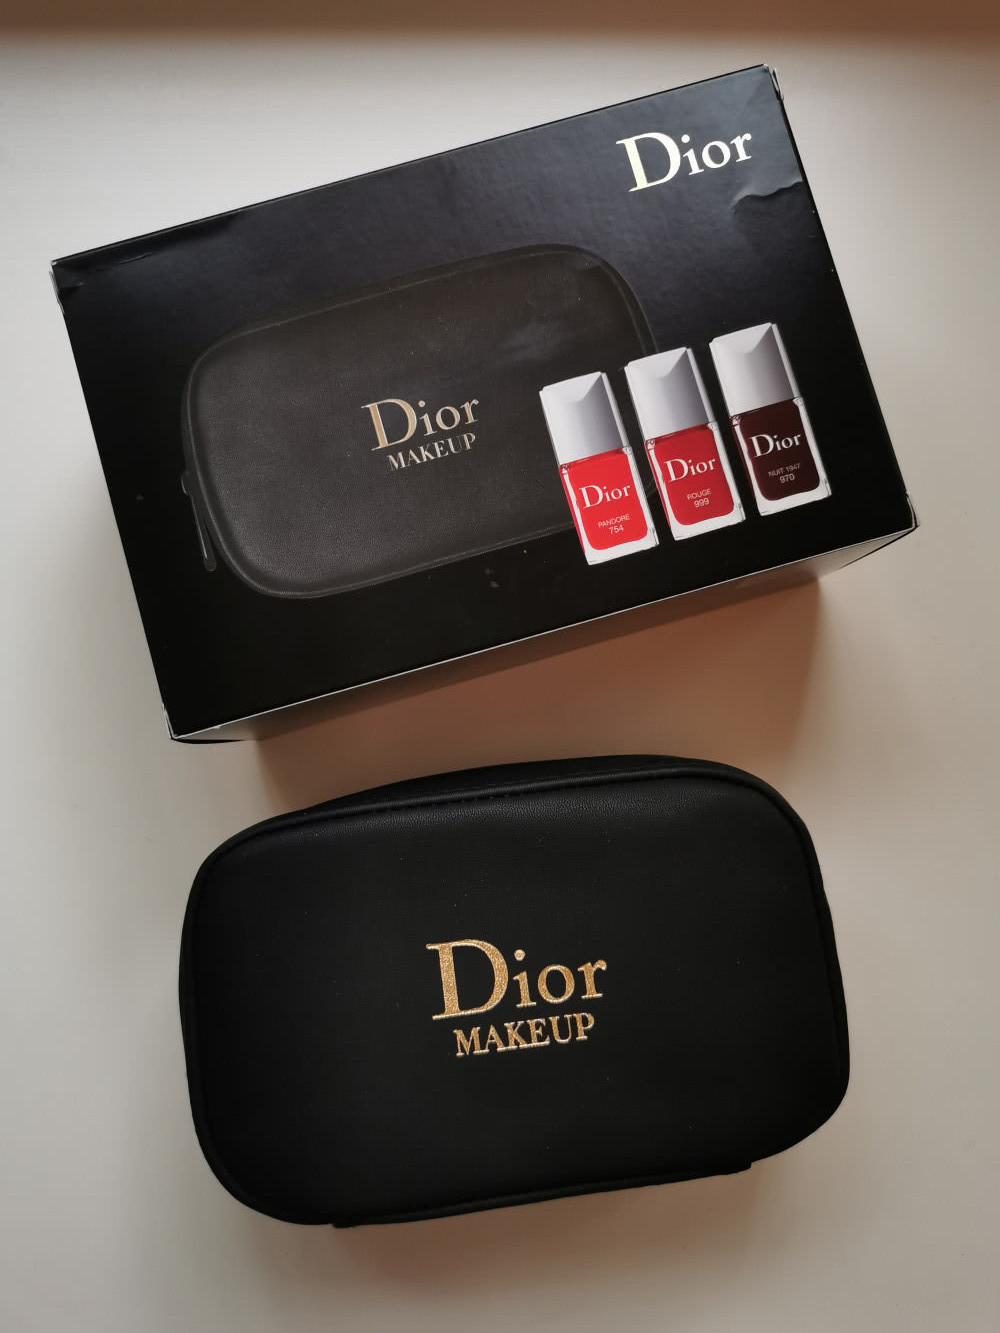 Набор лаков для ногтей Dior Vernis Les Iconiques Couture Color Trio